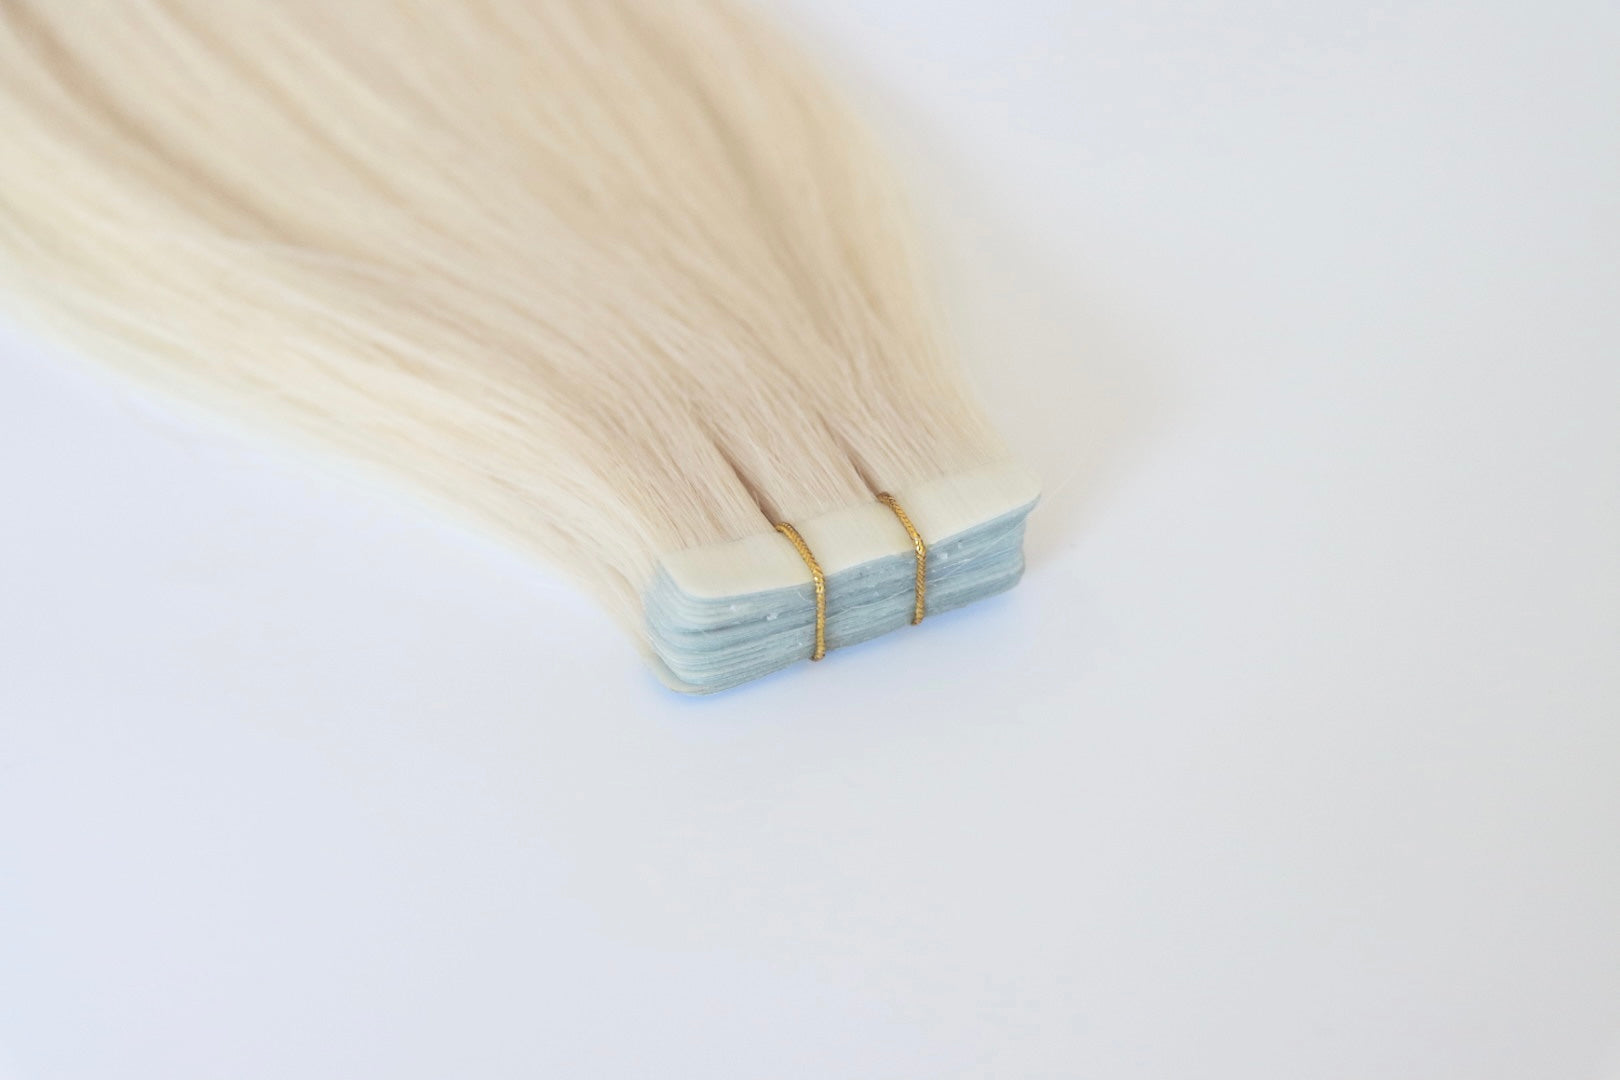 Sophia Hair Australia Tape In Hair Extensions on a white background